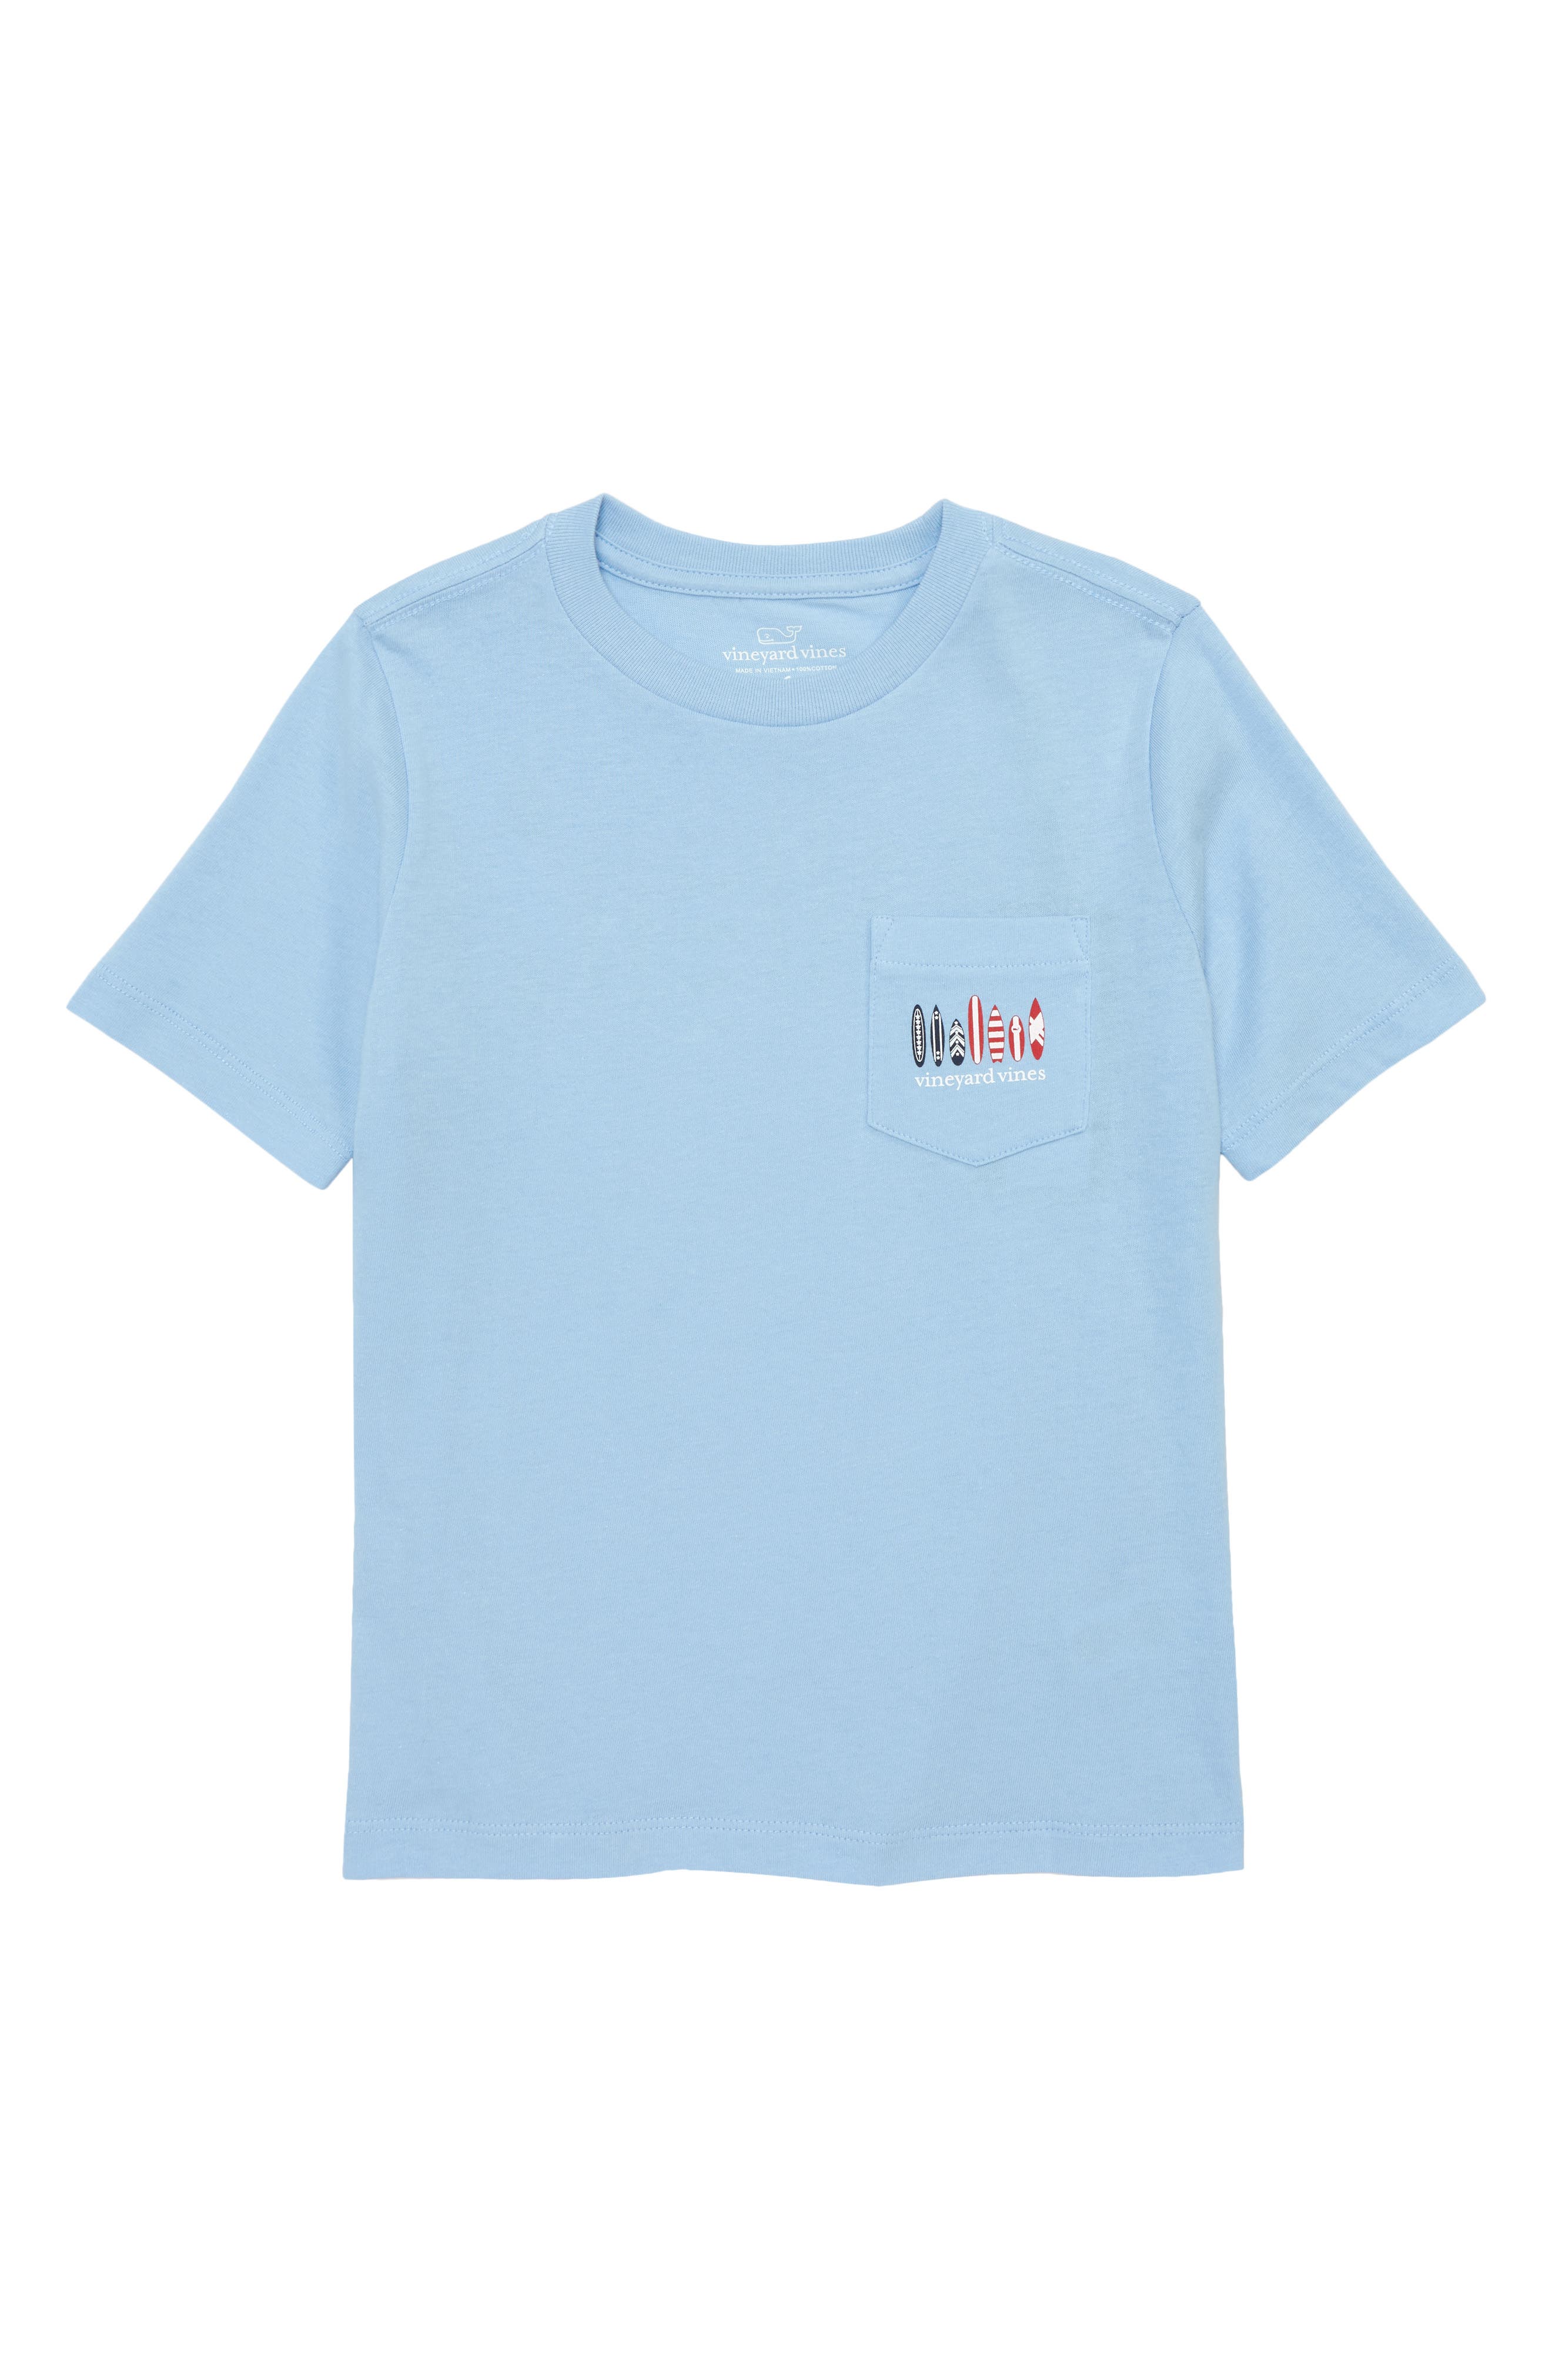 Short Sleeve Shirt Choose Any Design Retro Shirt Graphic Top Boys Shirt Girls Shirt CLEARANCE Gift for Boy